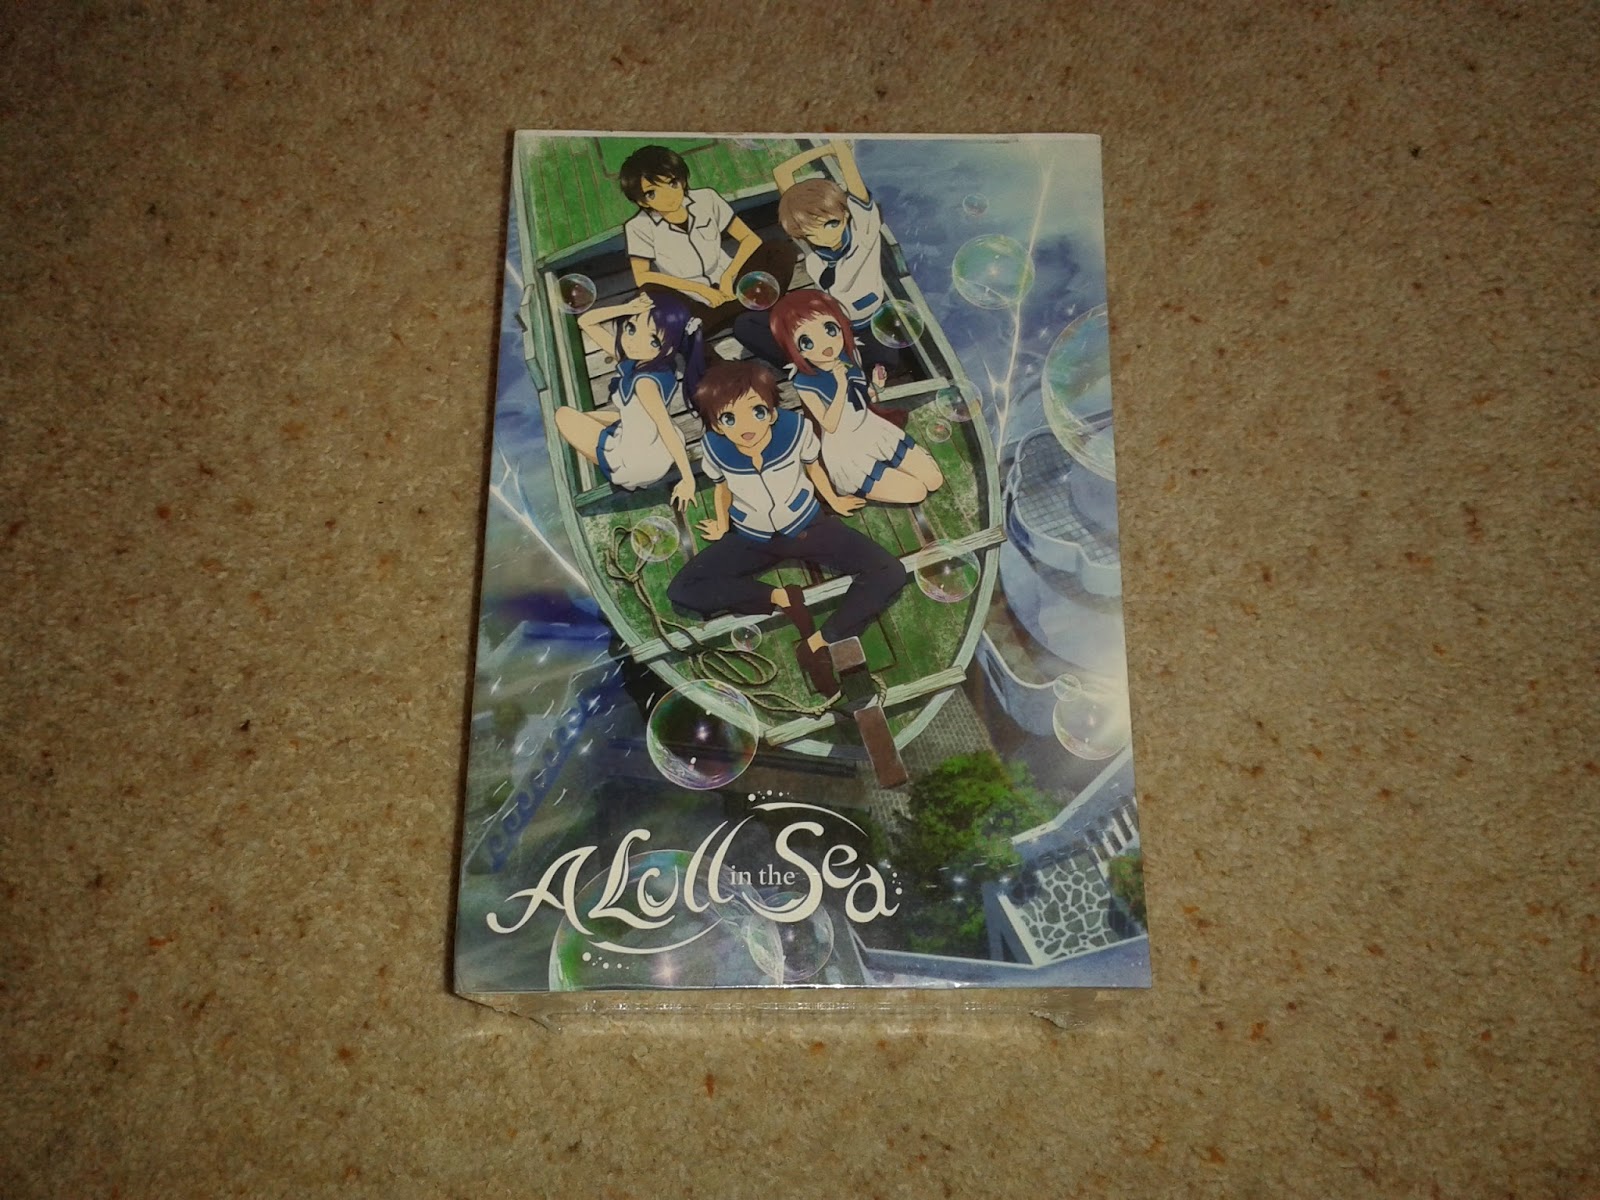 A Lull in the Sea / Nagi no Asukara Complete Season Set 1 2 Anime DVD